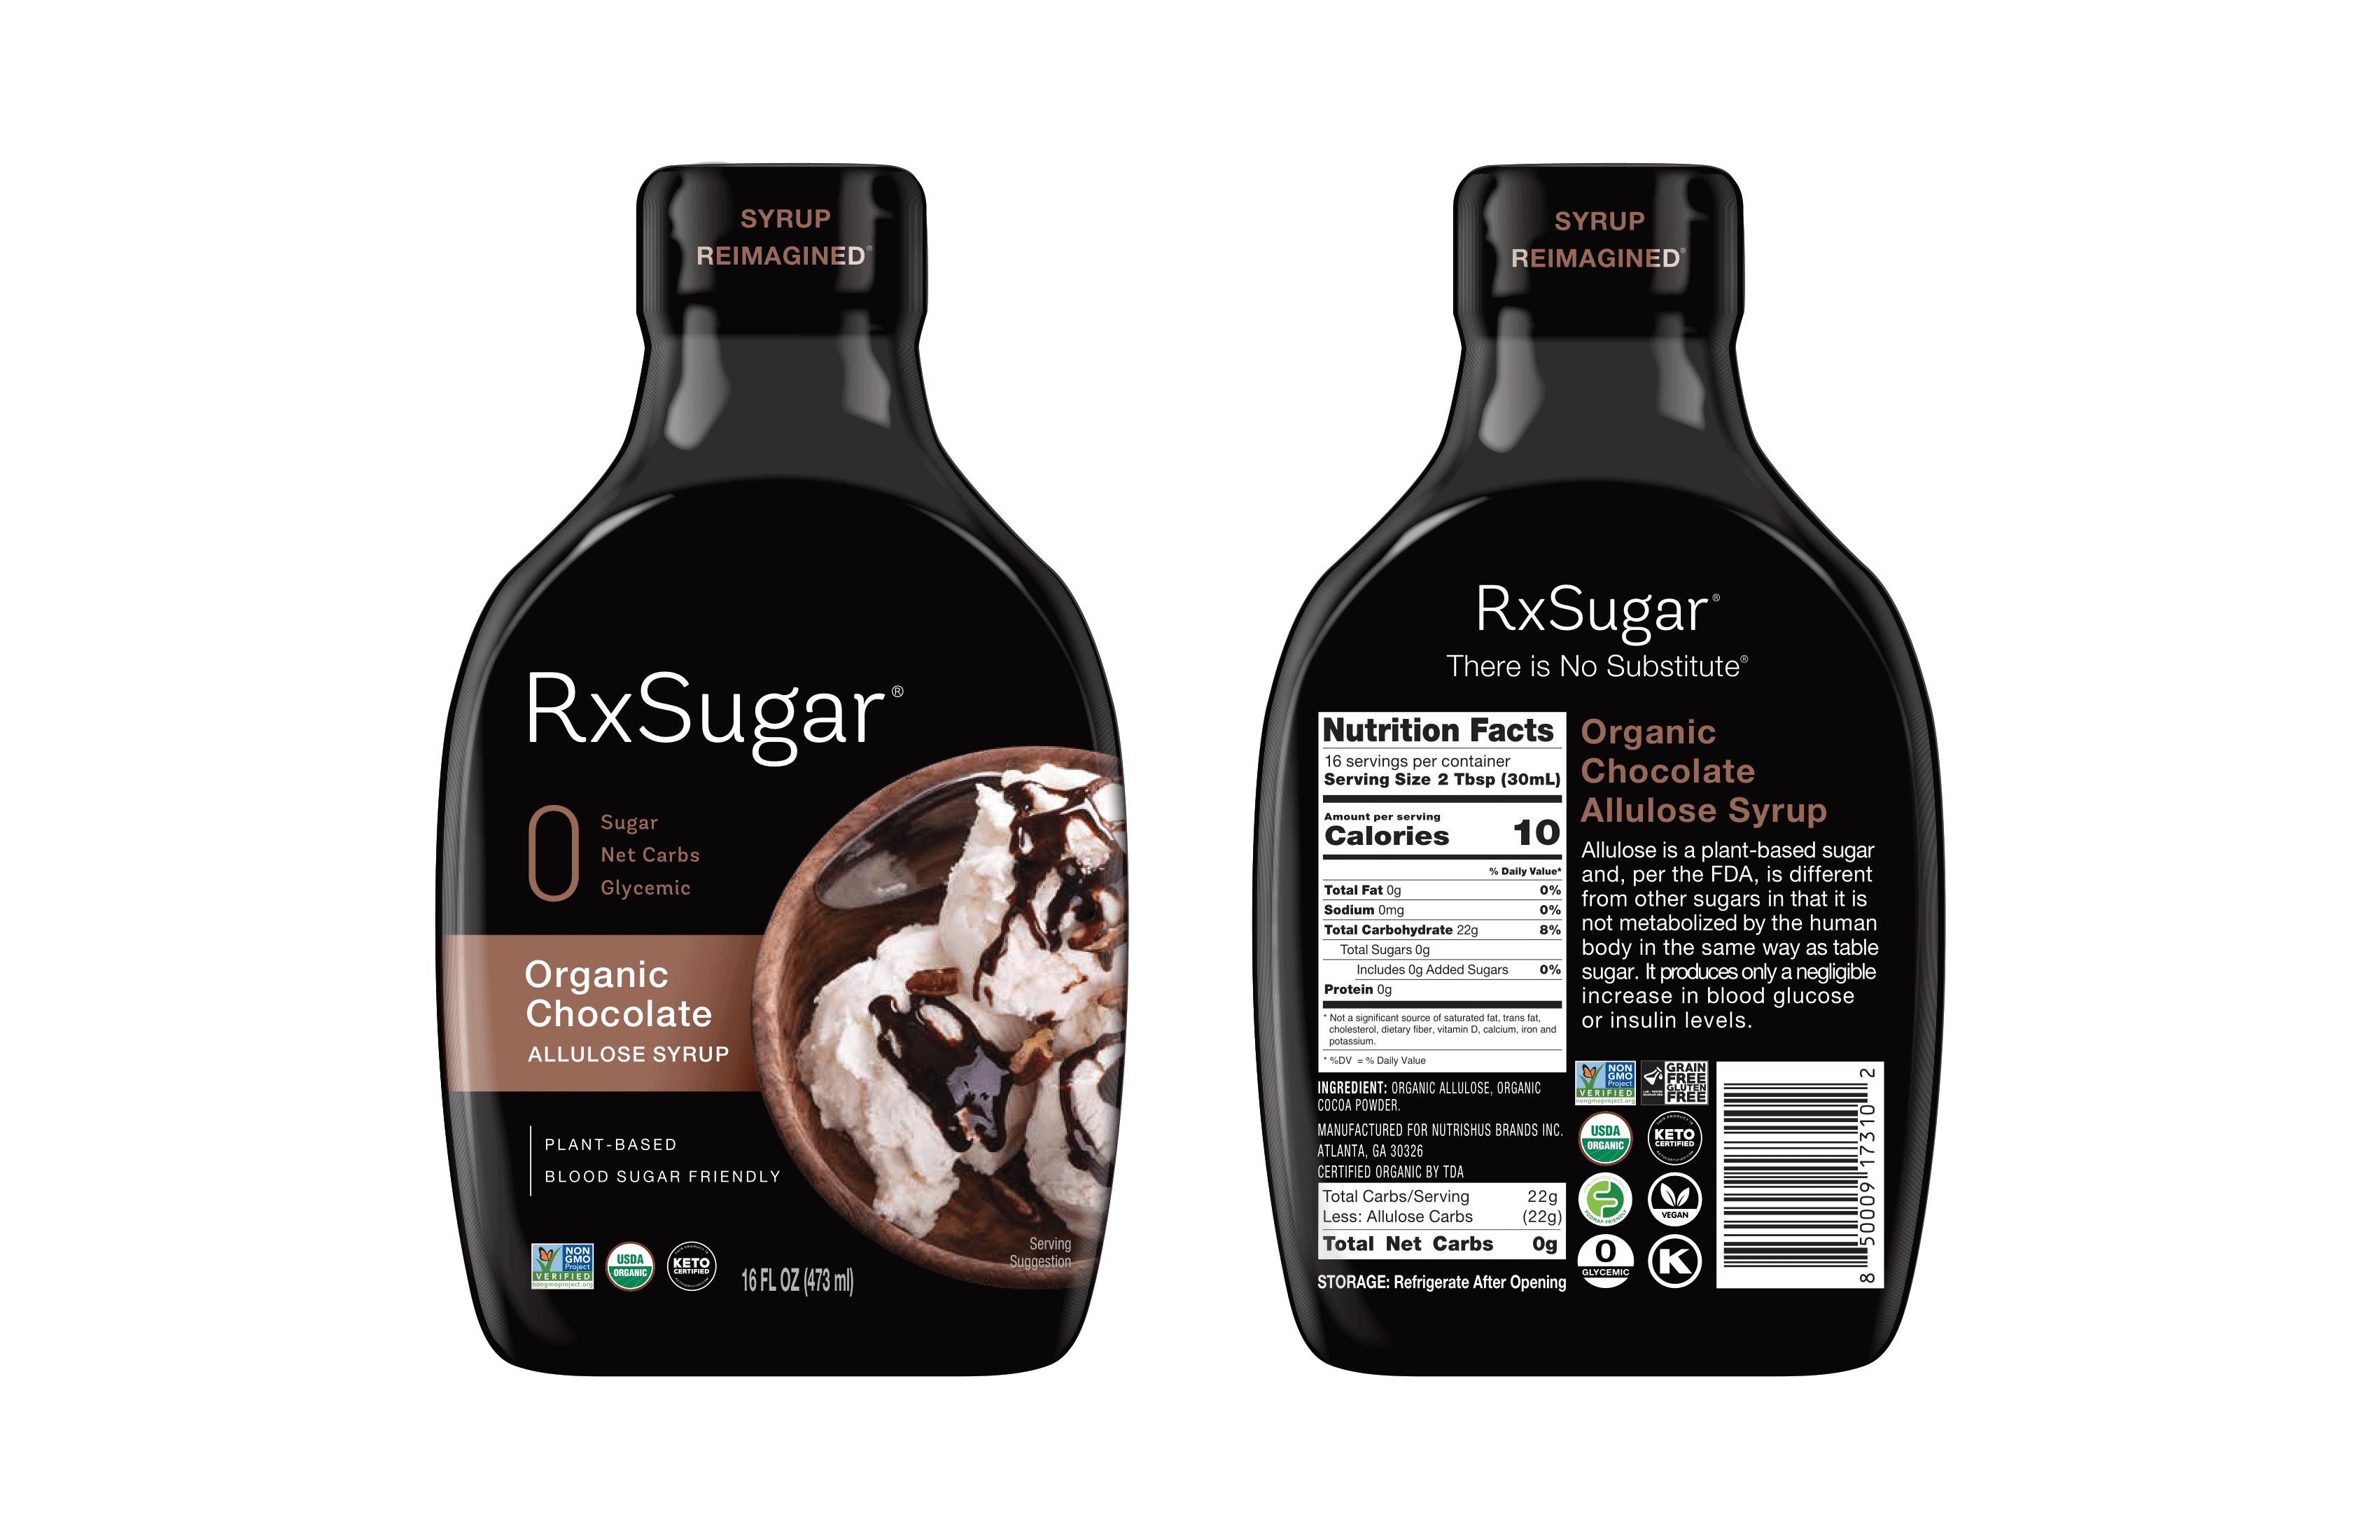 RxSugar Organic Chocolate Allulose Syrup 6 units per case 16.0 oz Product Label